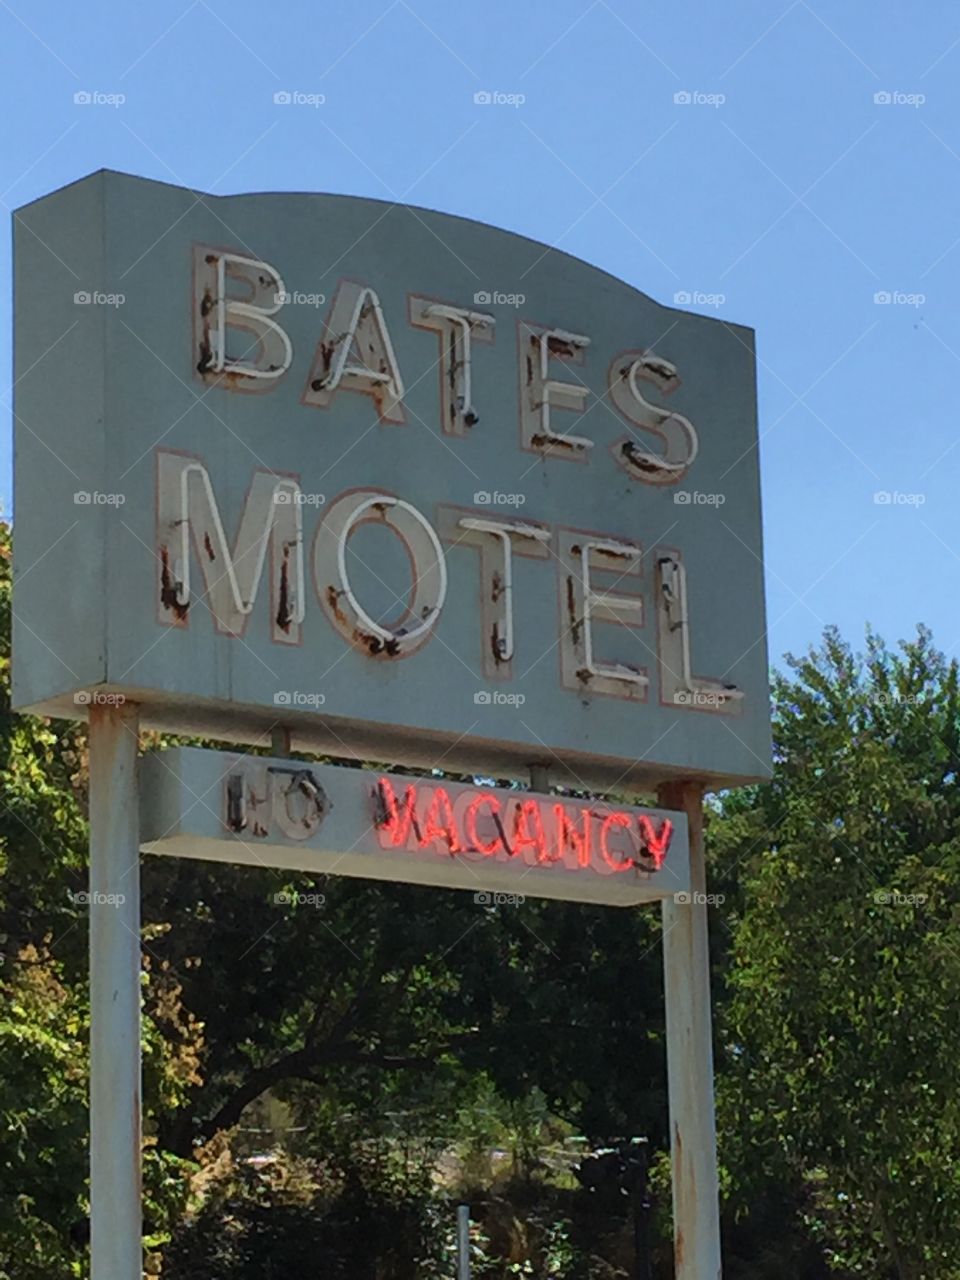 The Bates Motel! 